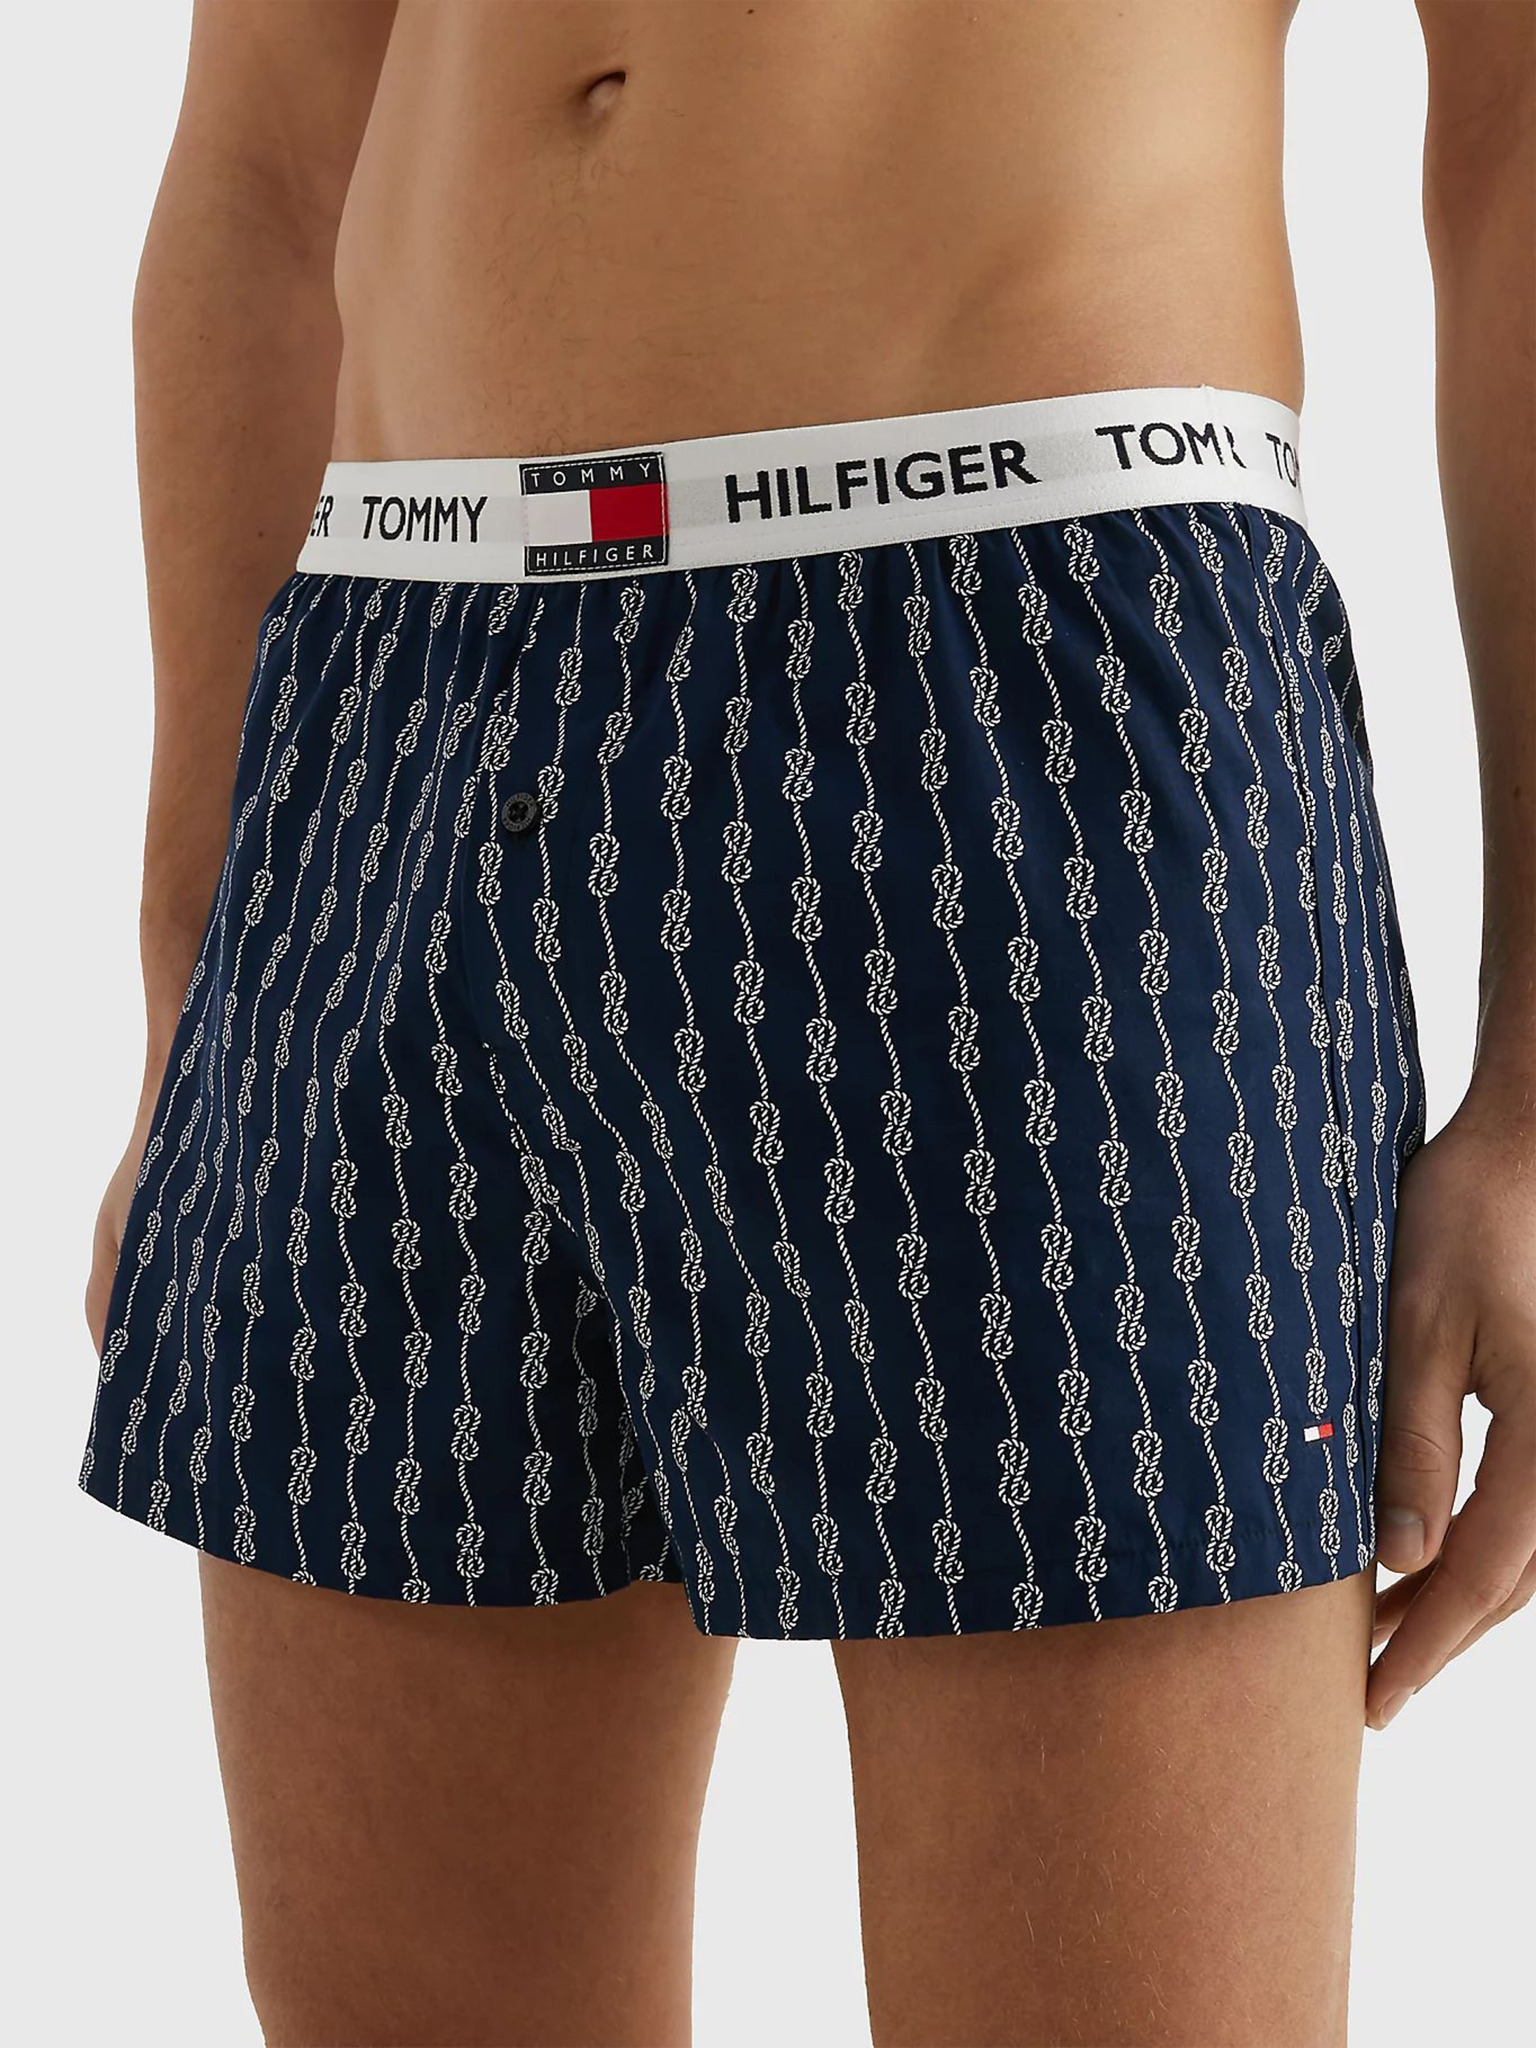 Tommy Hilfiger heritage logo zebra printed boxers in blue